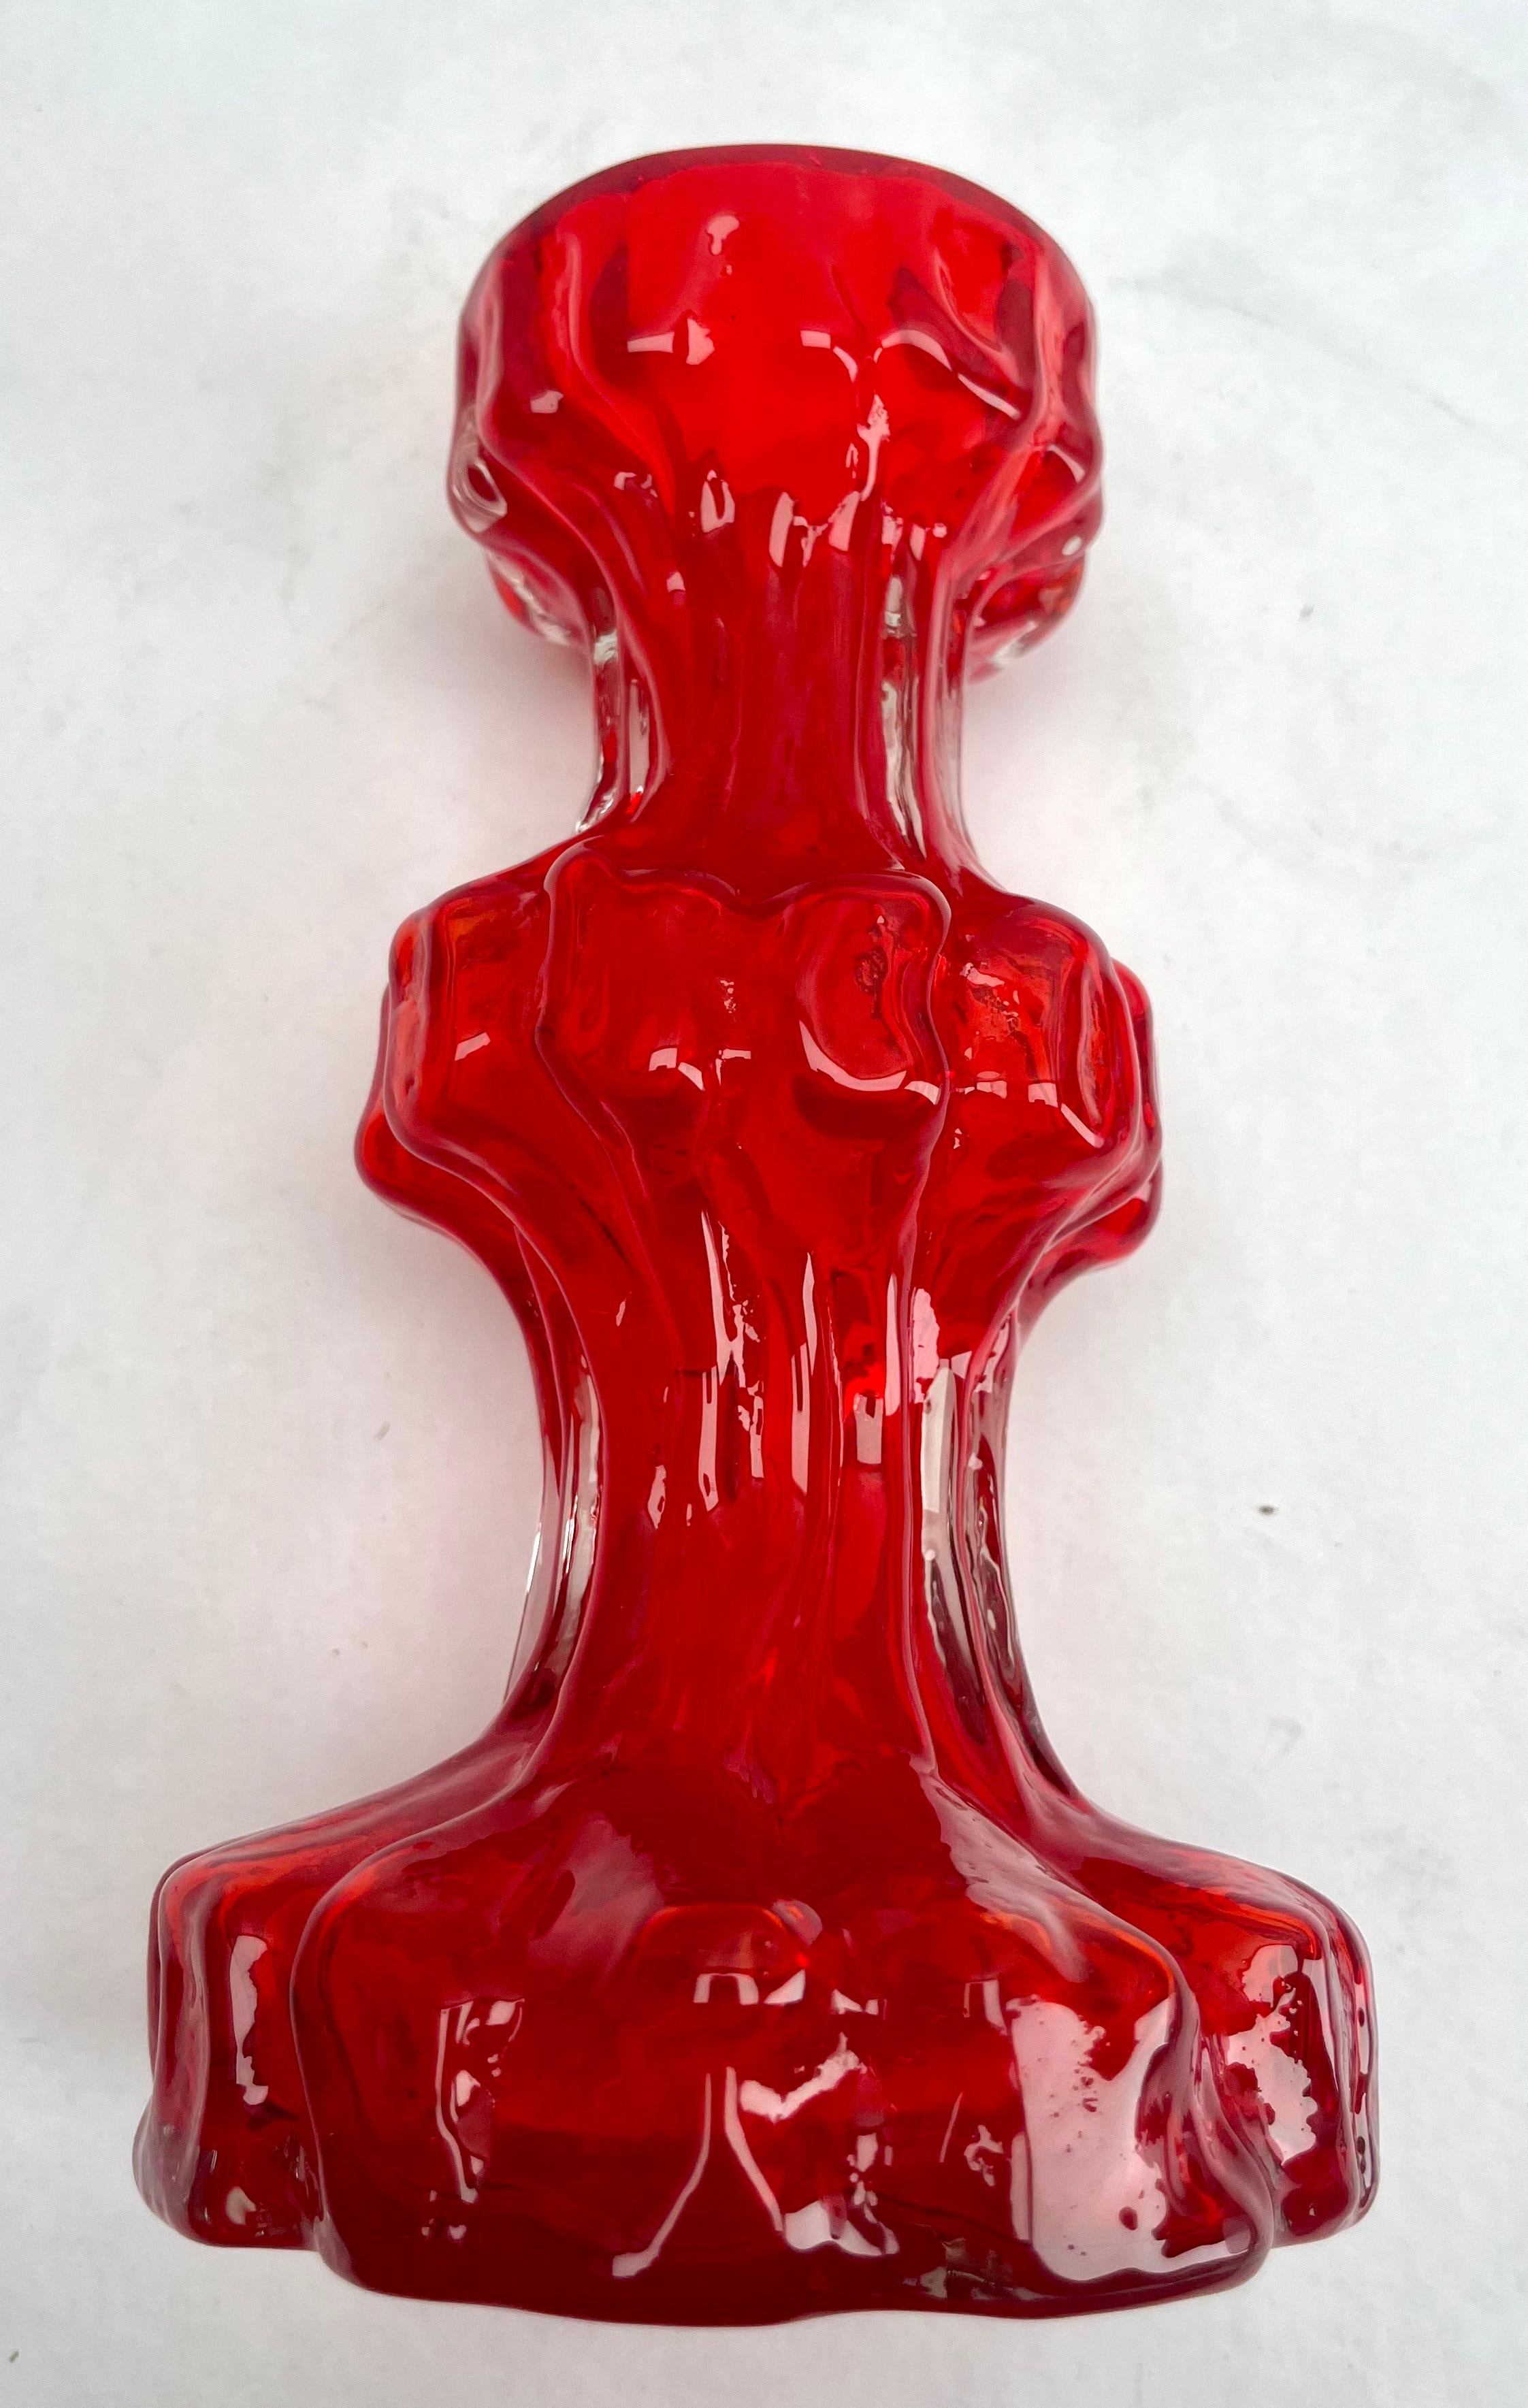 Ingrid Glas ‘Germany’ Bark Vase in Red, 1970s For Sale 1